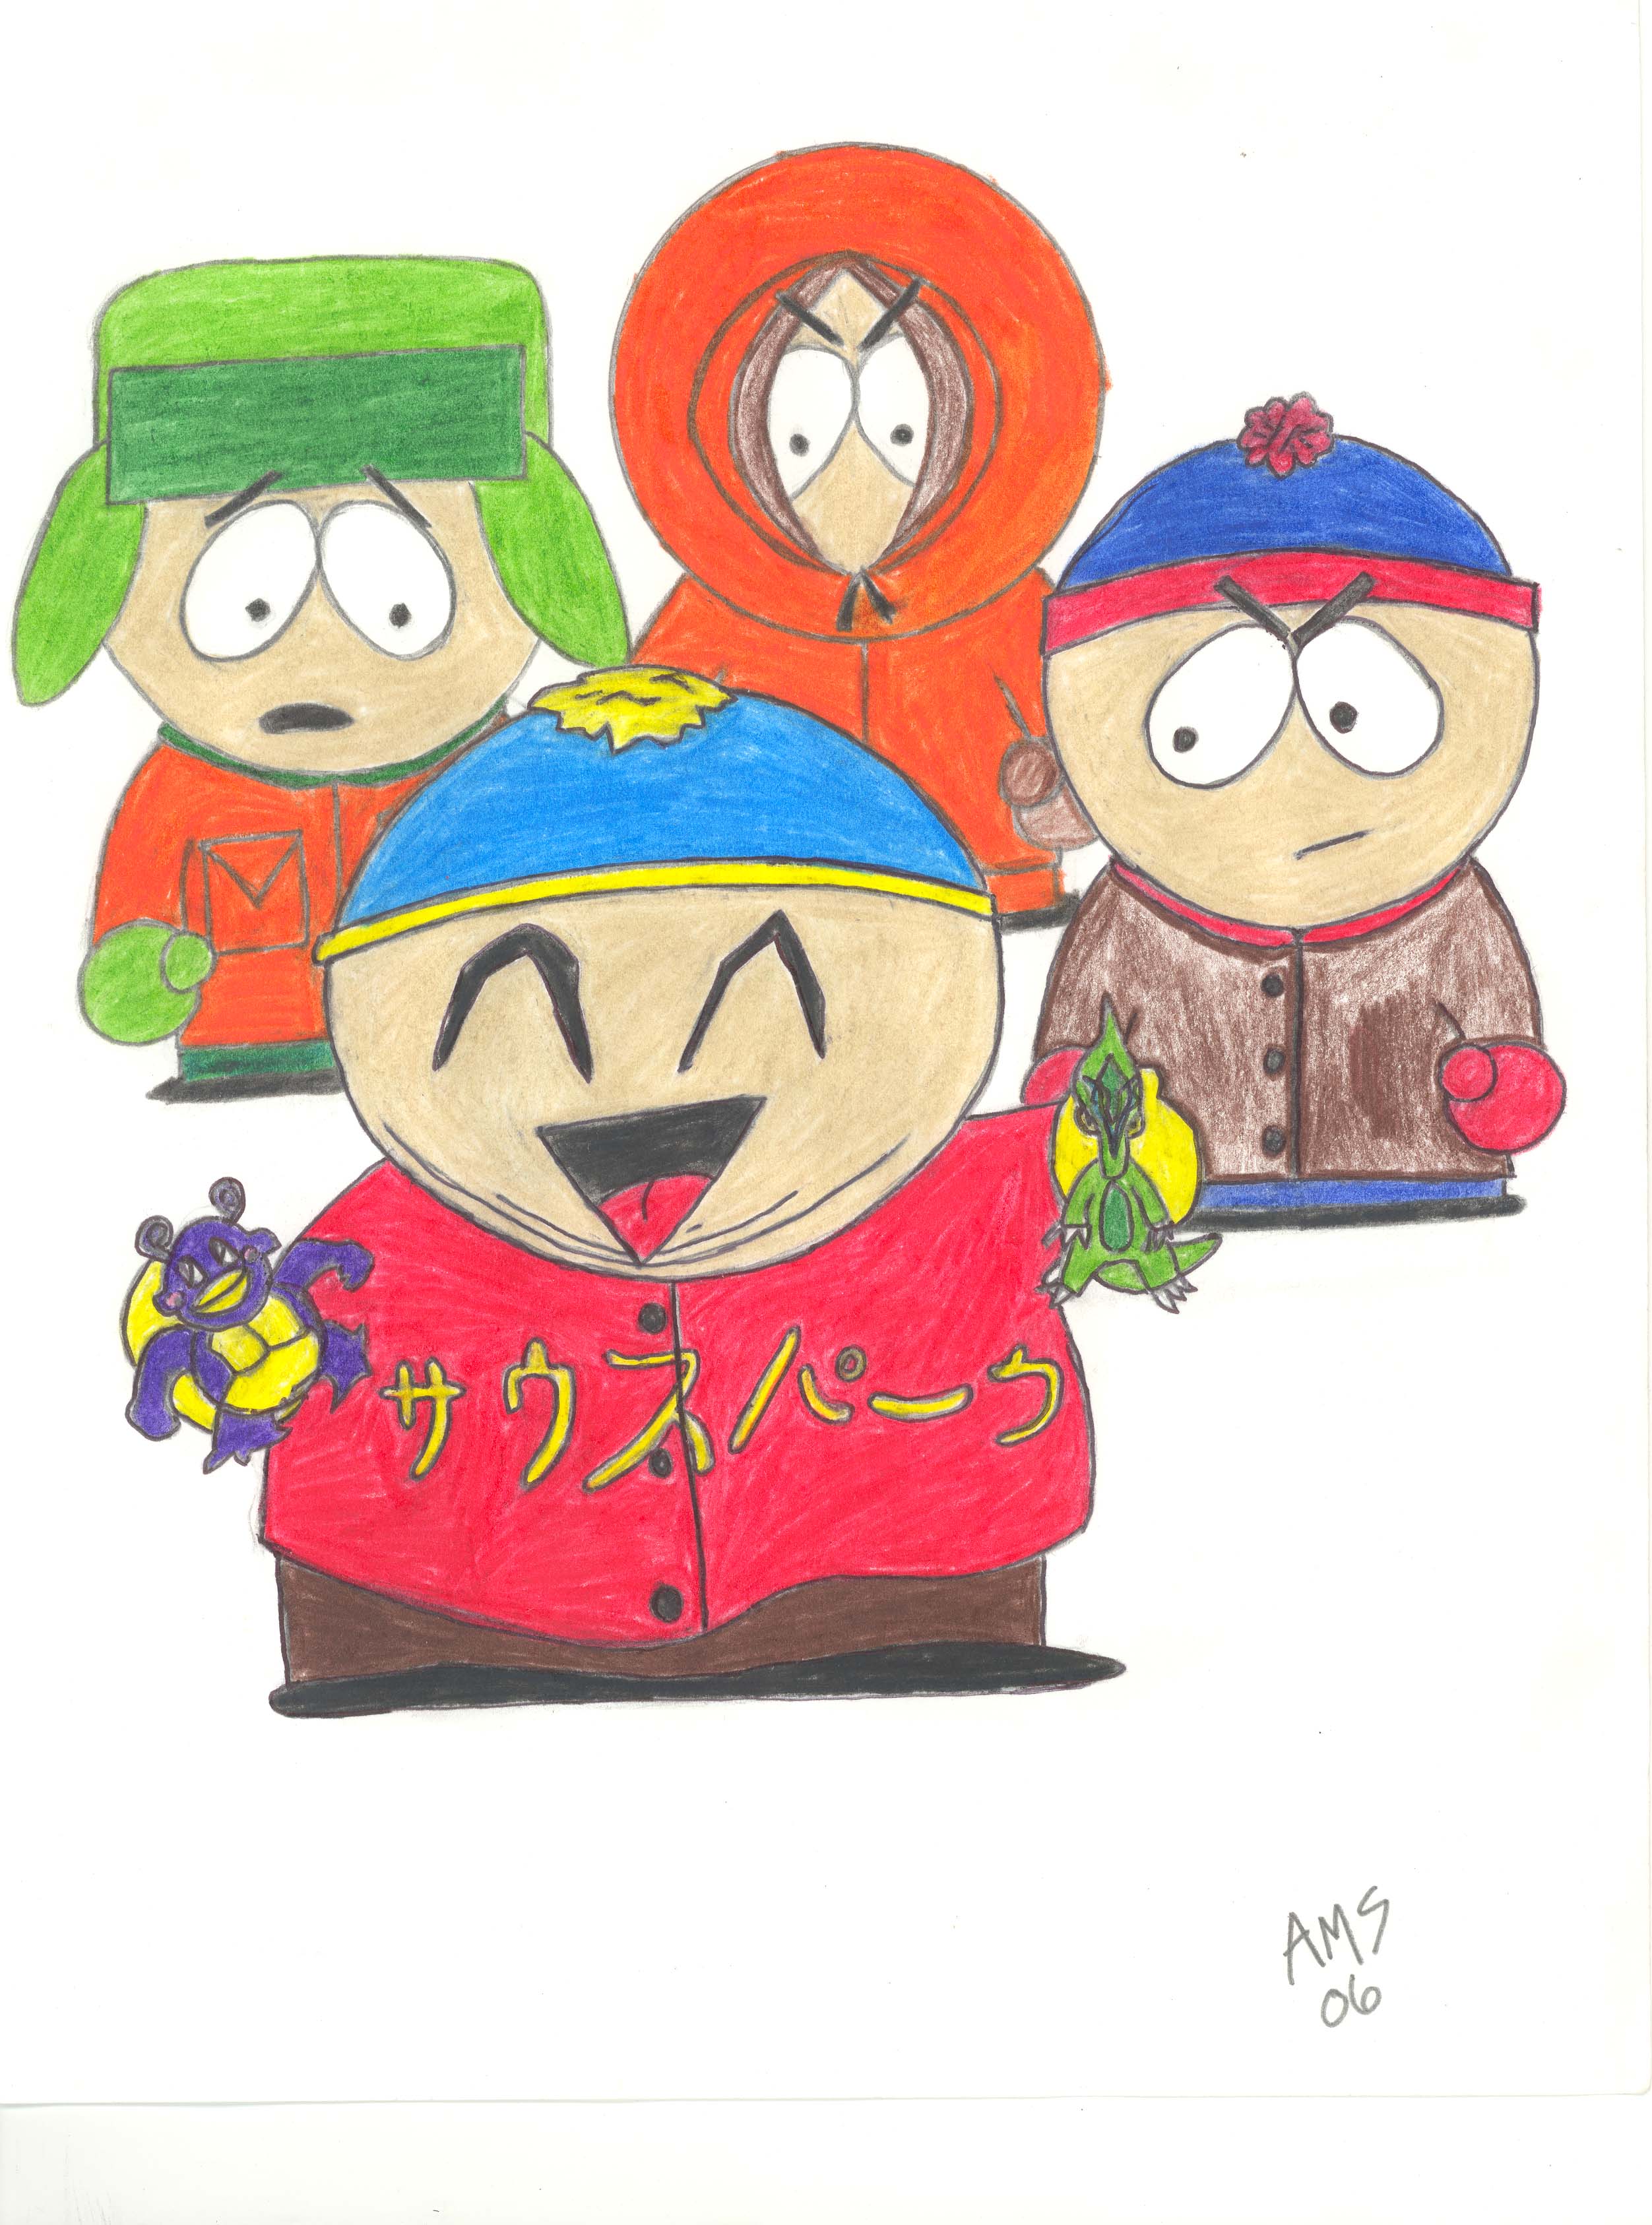 Crazy japanese cartman by iluvsouthpark